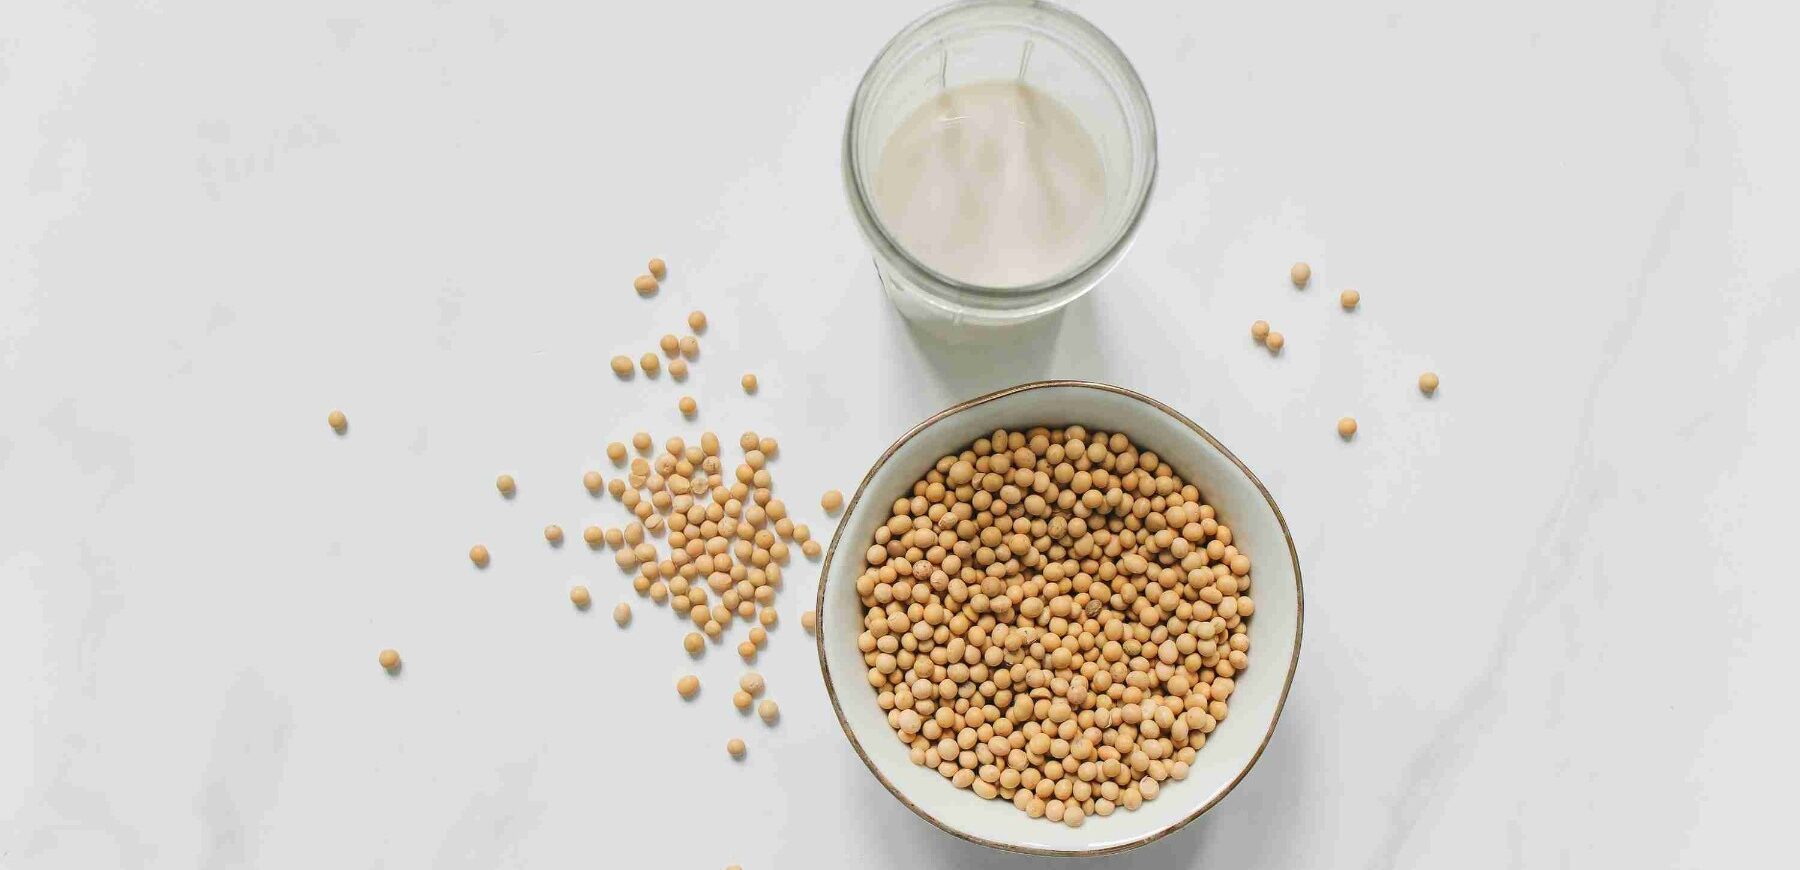 soy milk - Foods High in Vitamin D